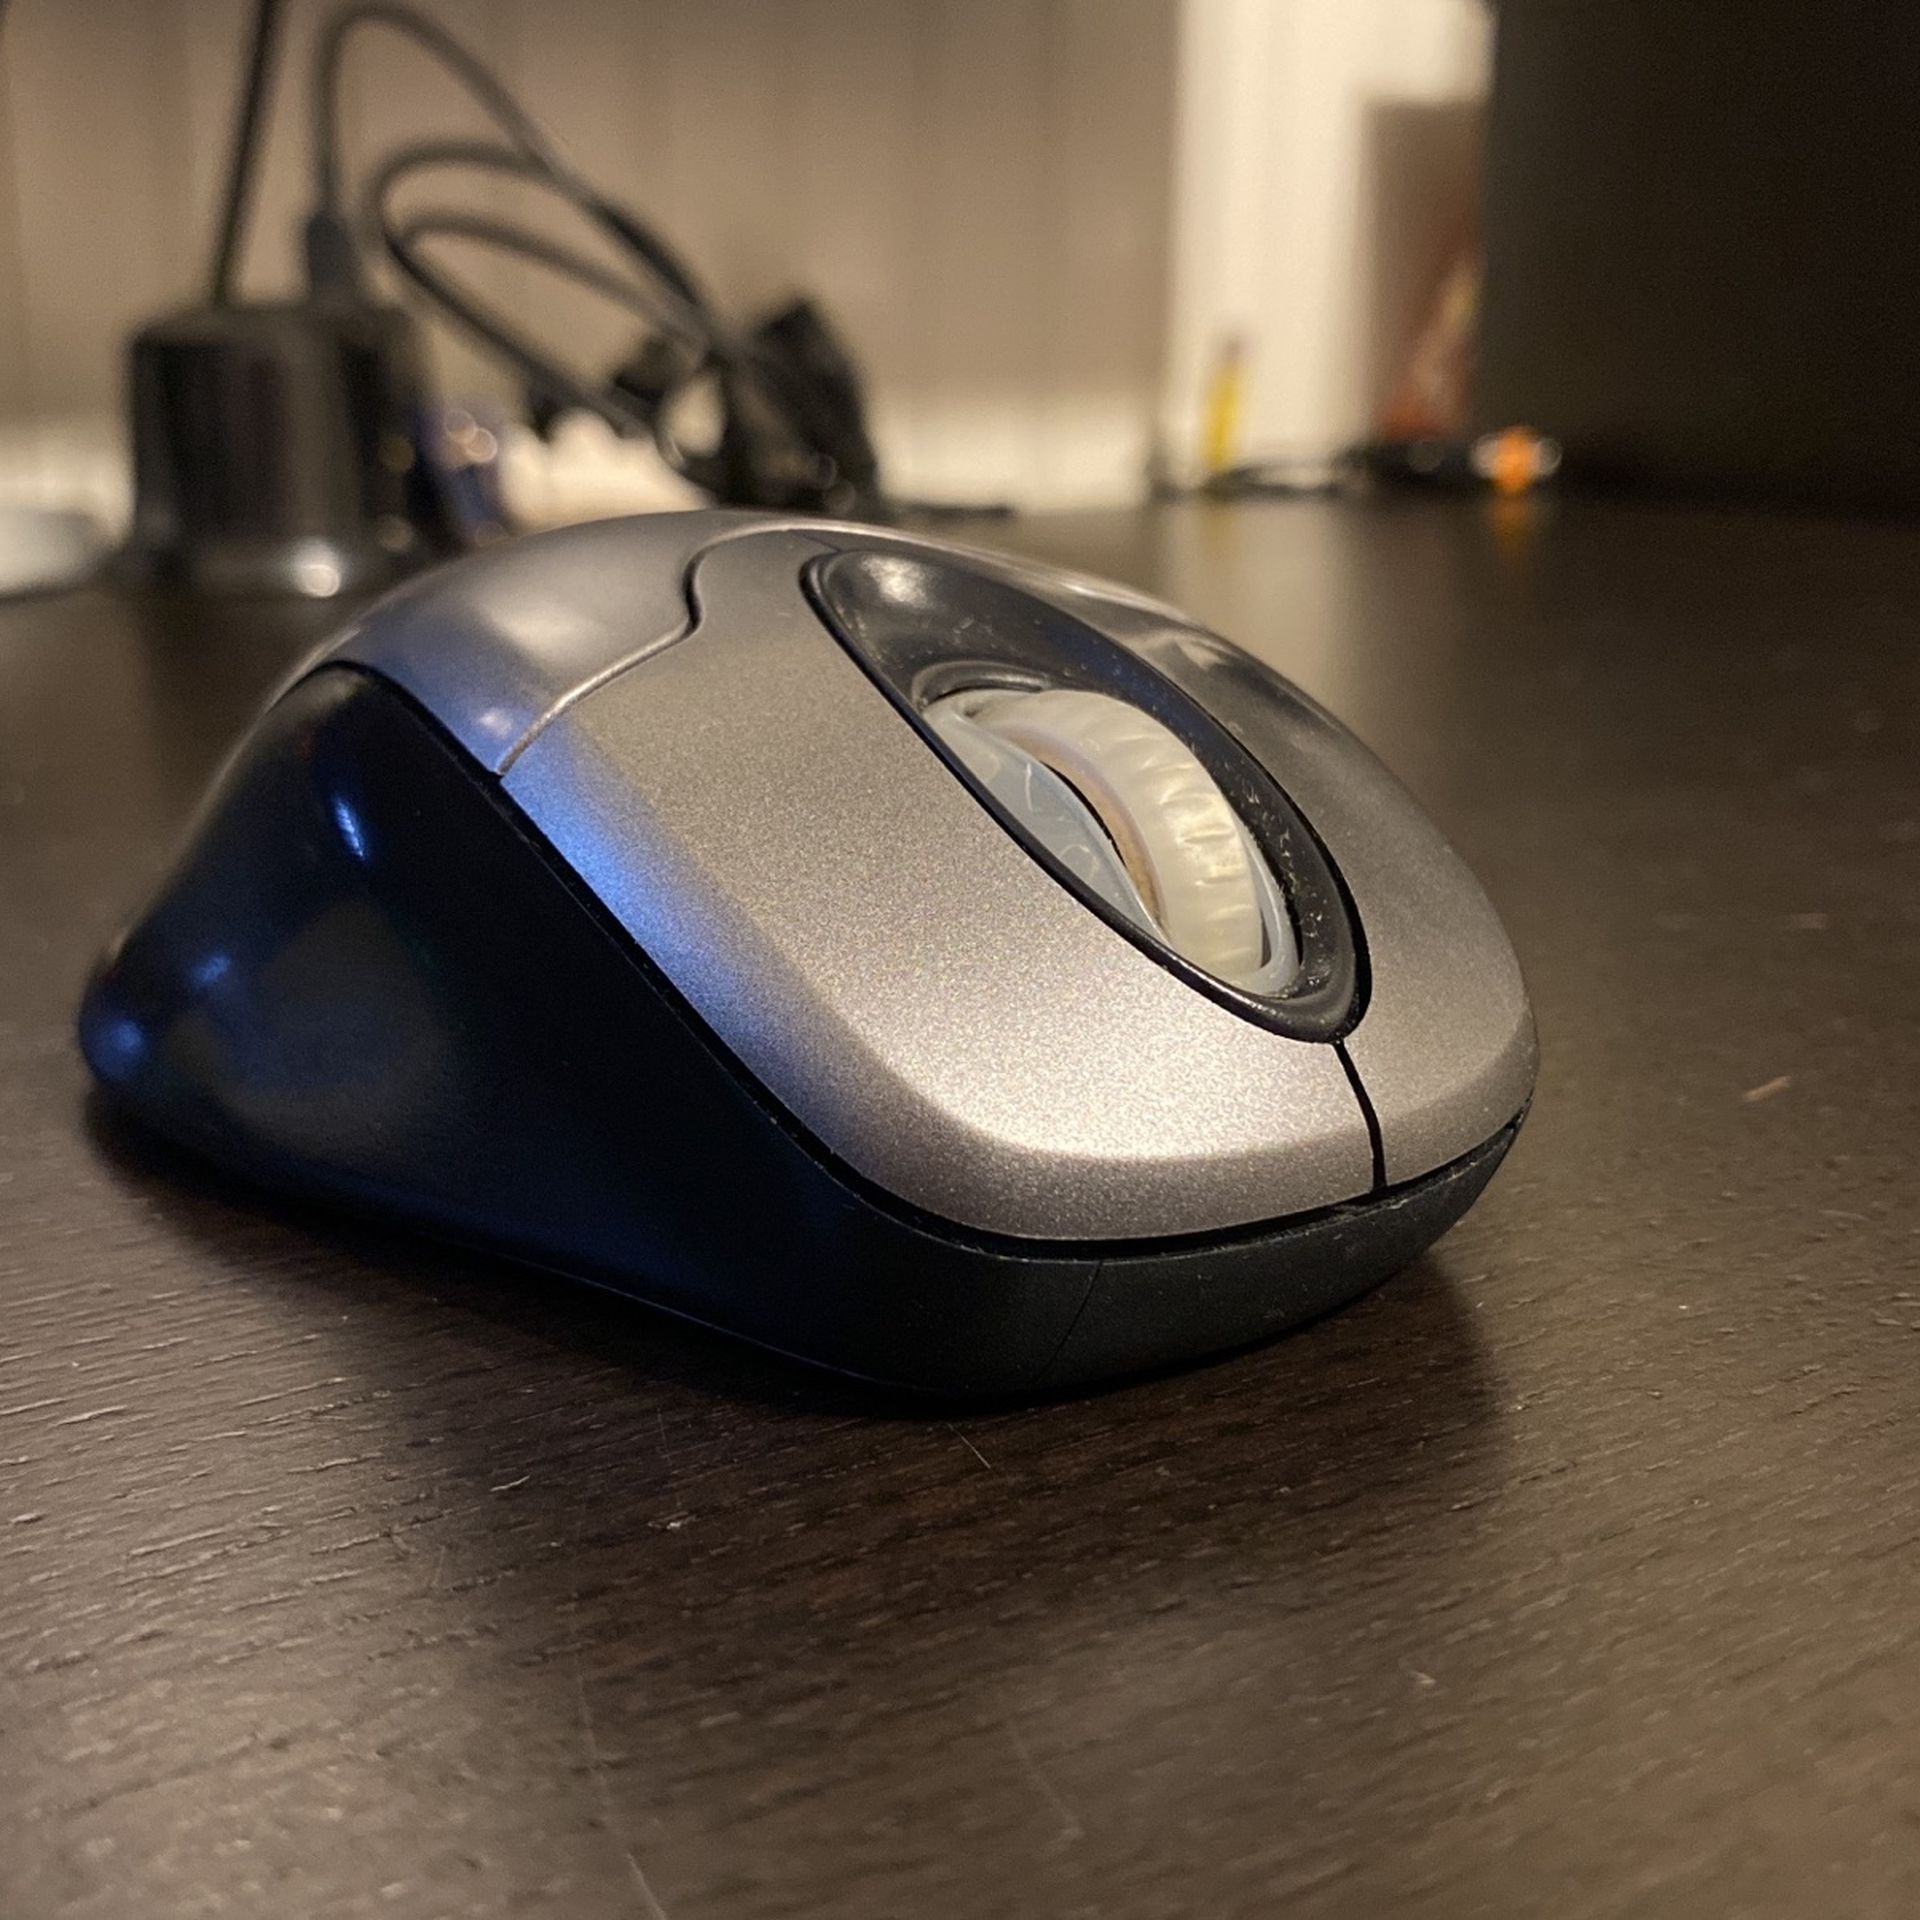 Microsoft Wireless Optical Mouse 2.0